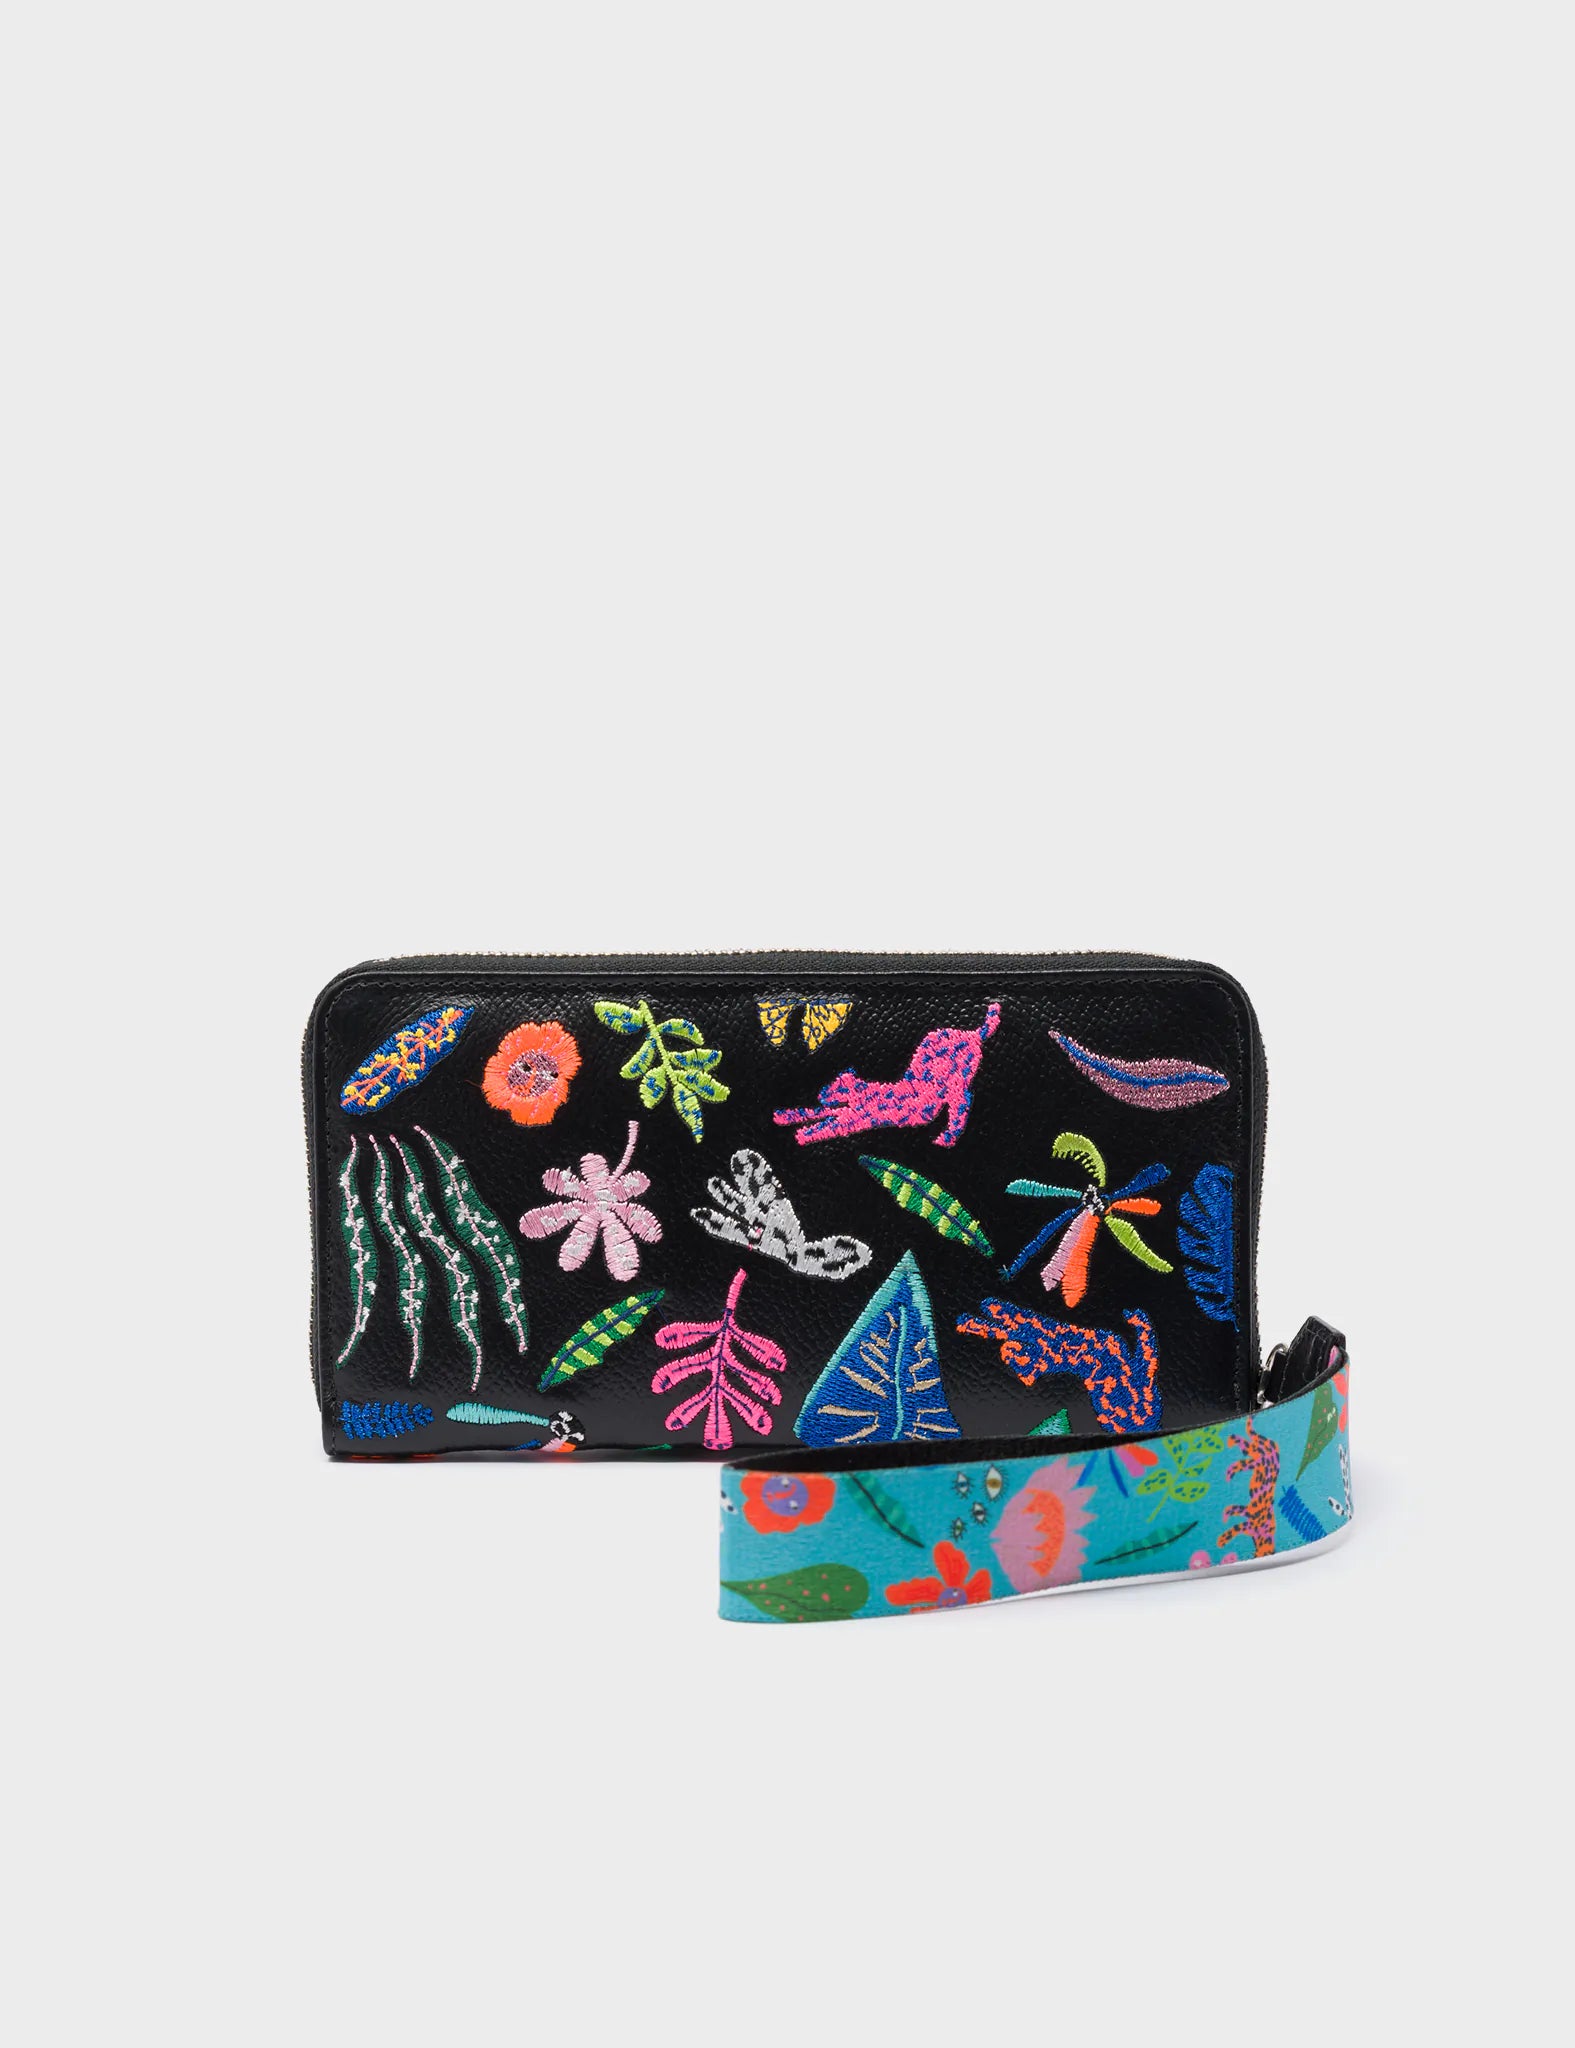 Francis Black Leather Wallet - El Trópico Embroidery Design - Back